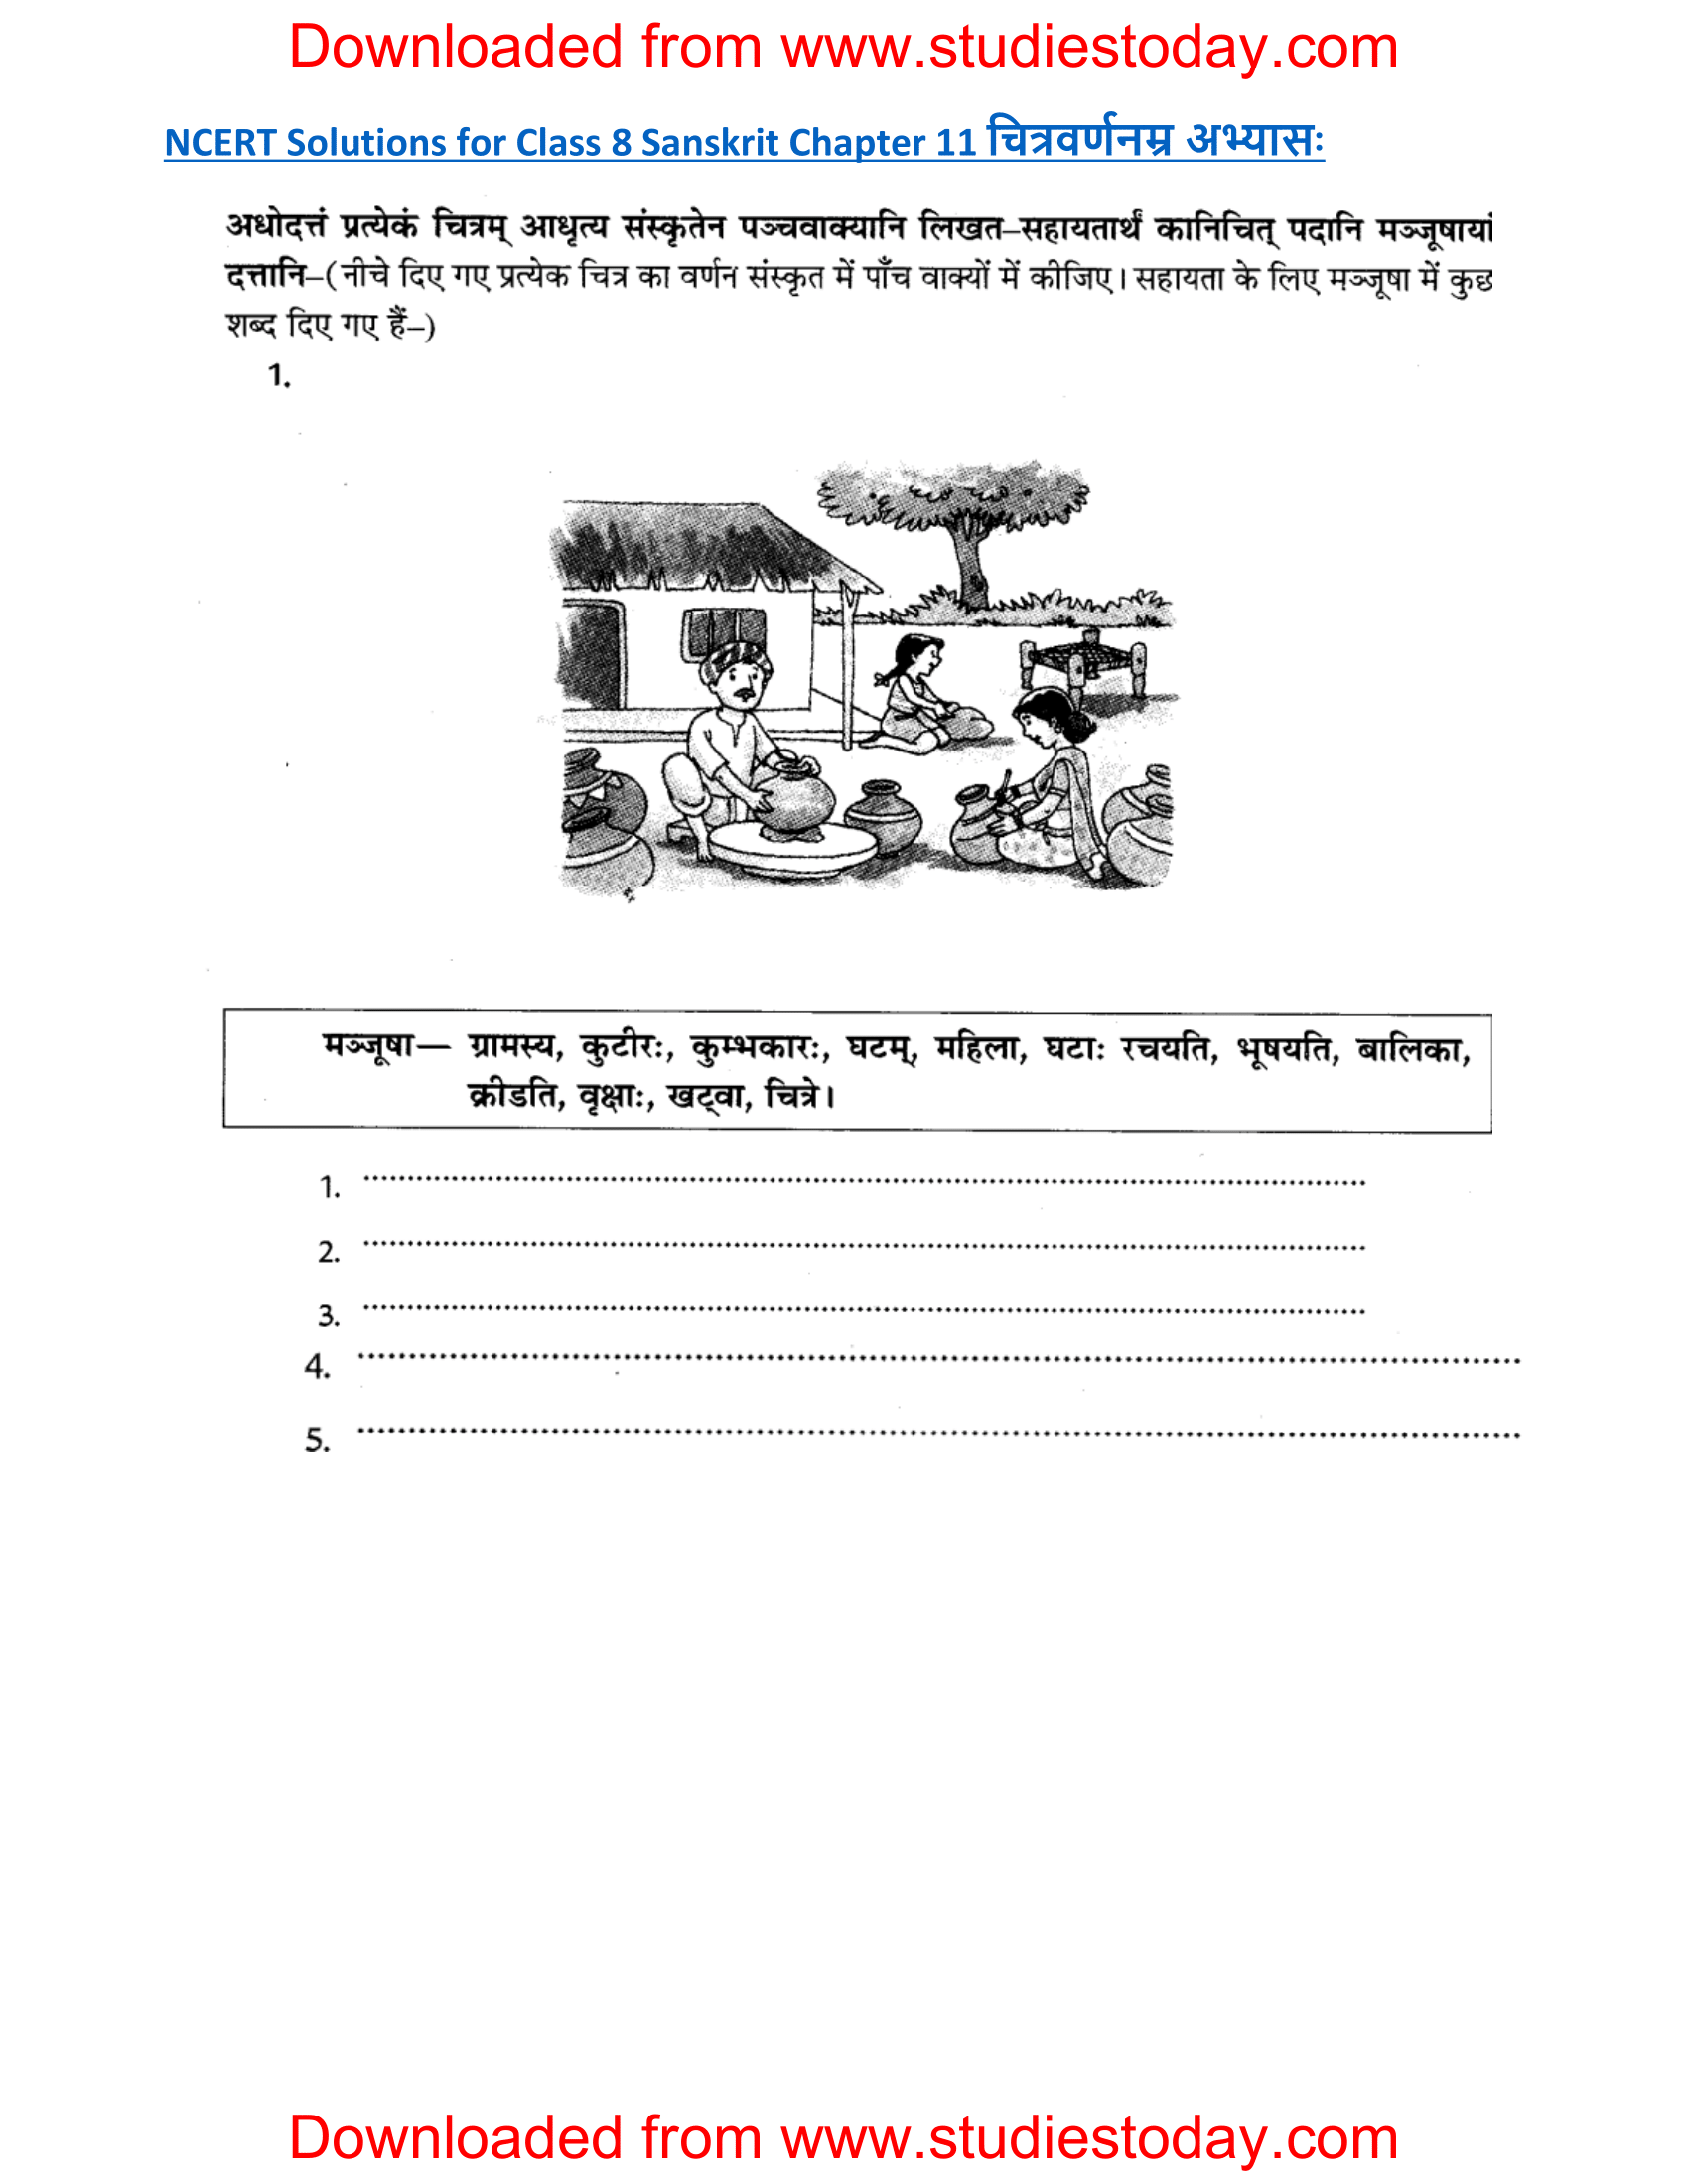 ncert-solutions-class-8-sanskrit-chapter-11-chitravarnan-1